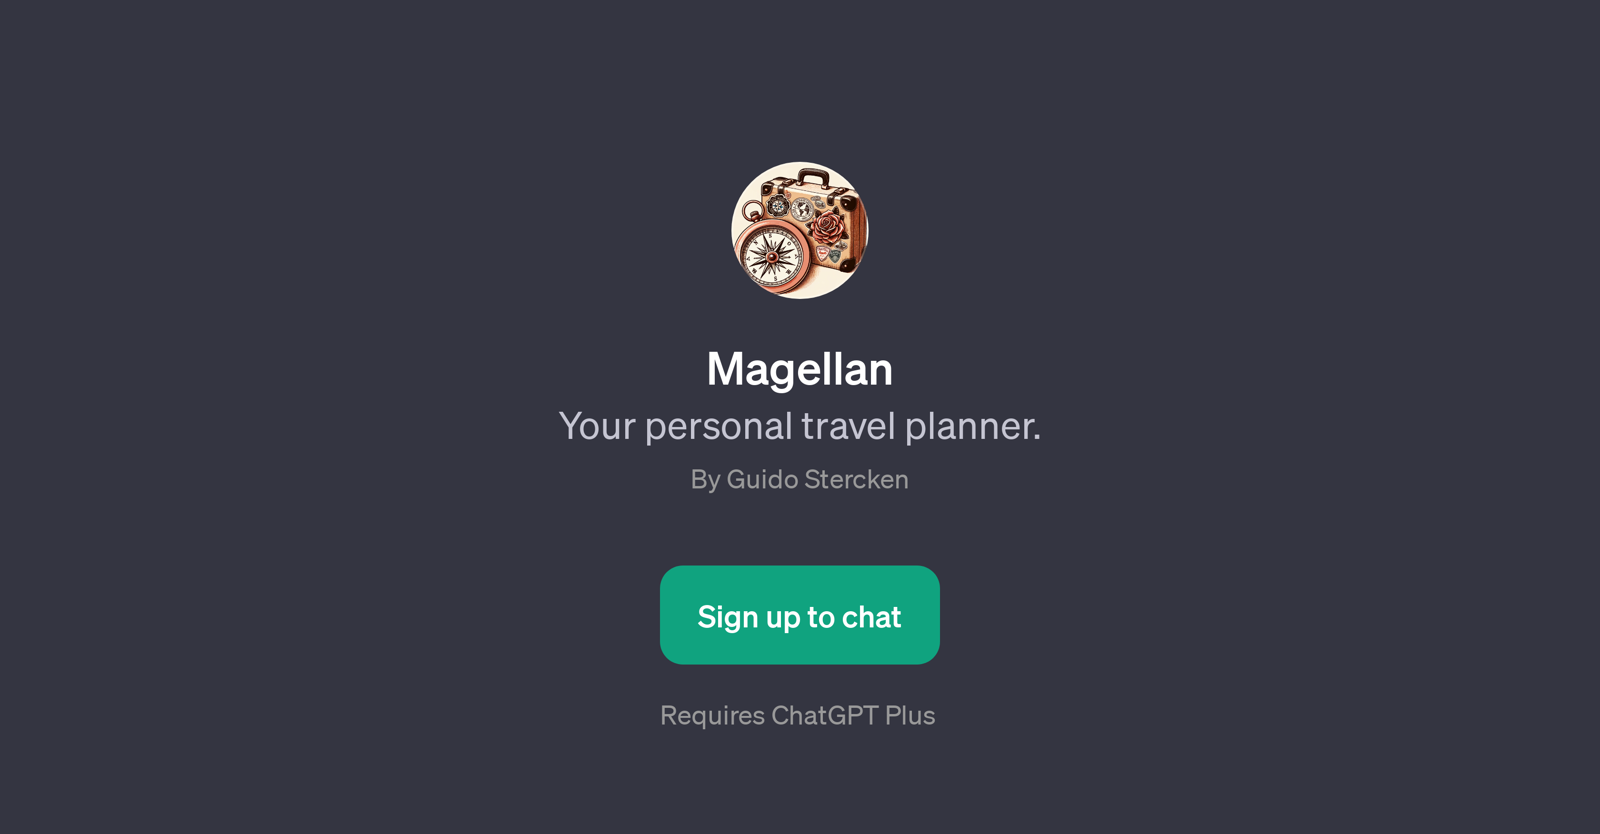 Magellan website